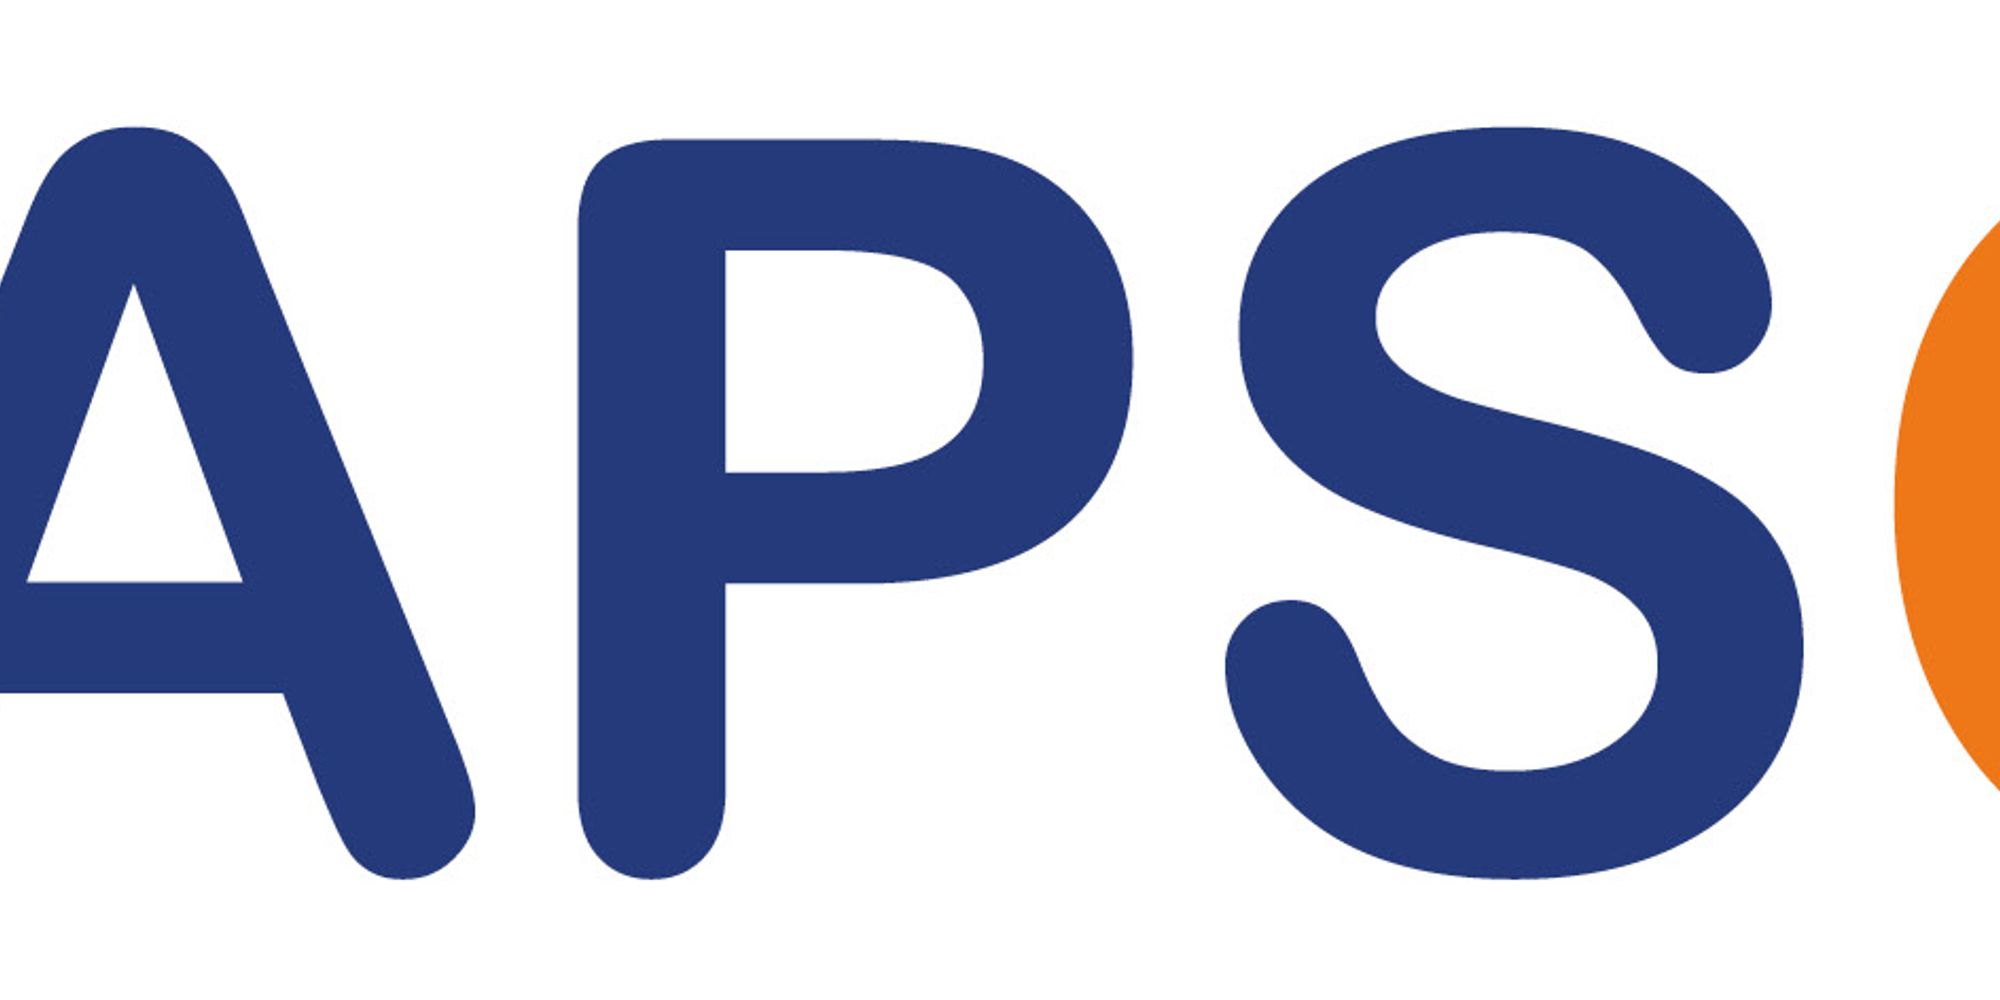 Apsco Landscape Logo 300